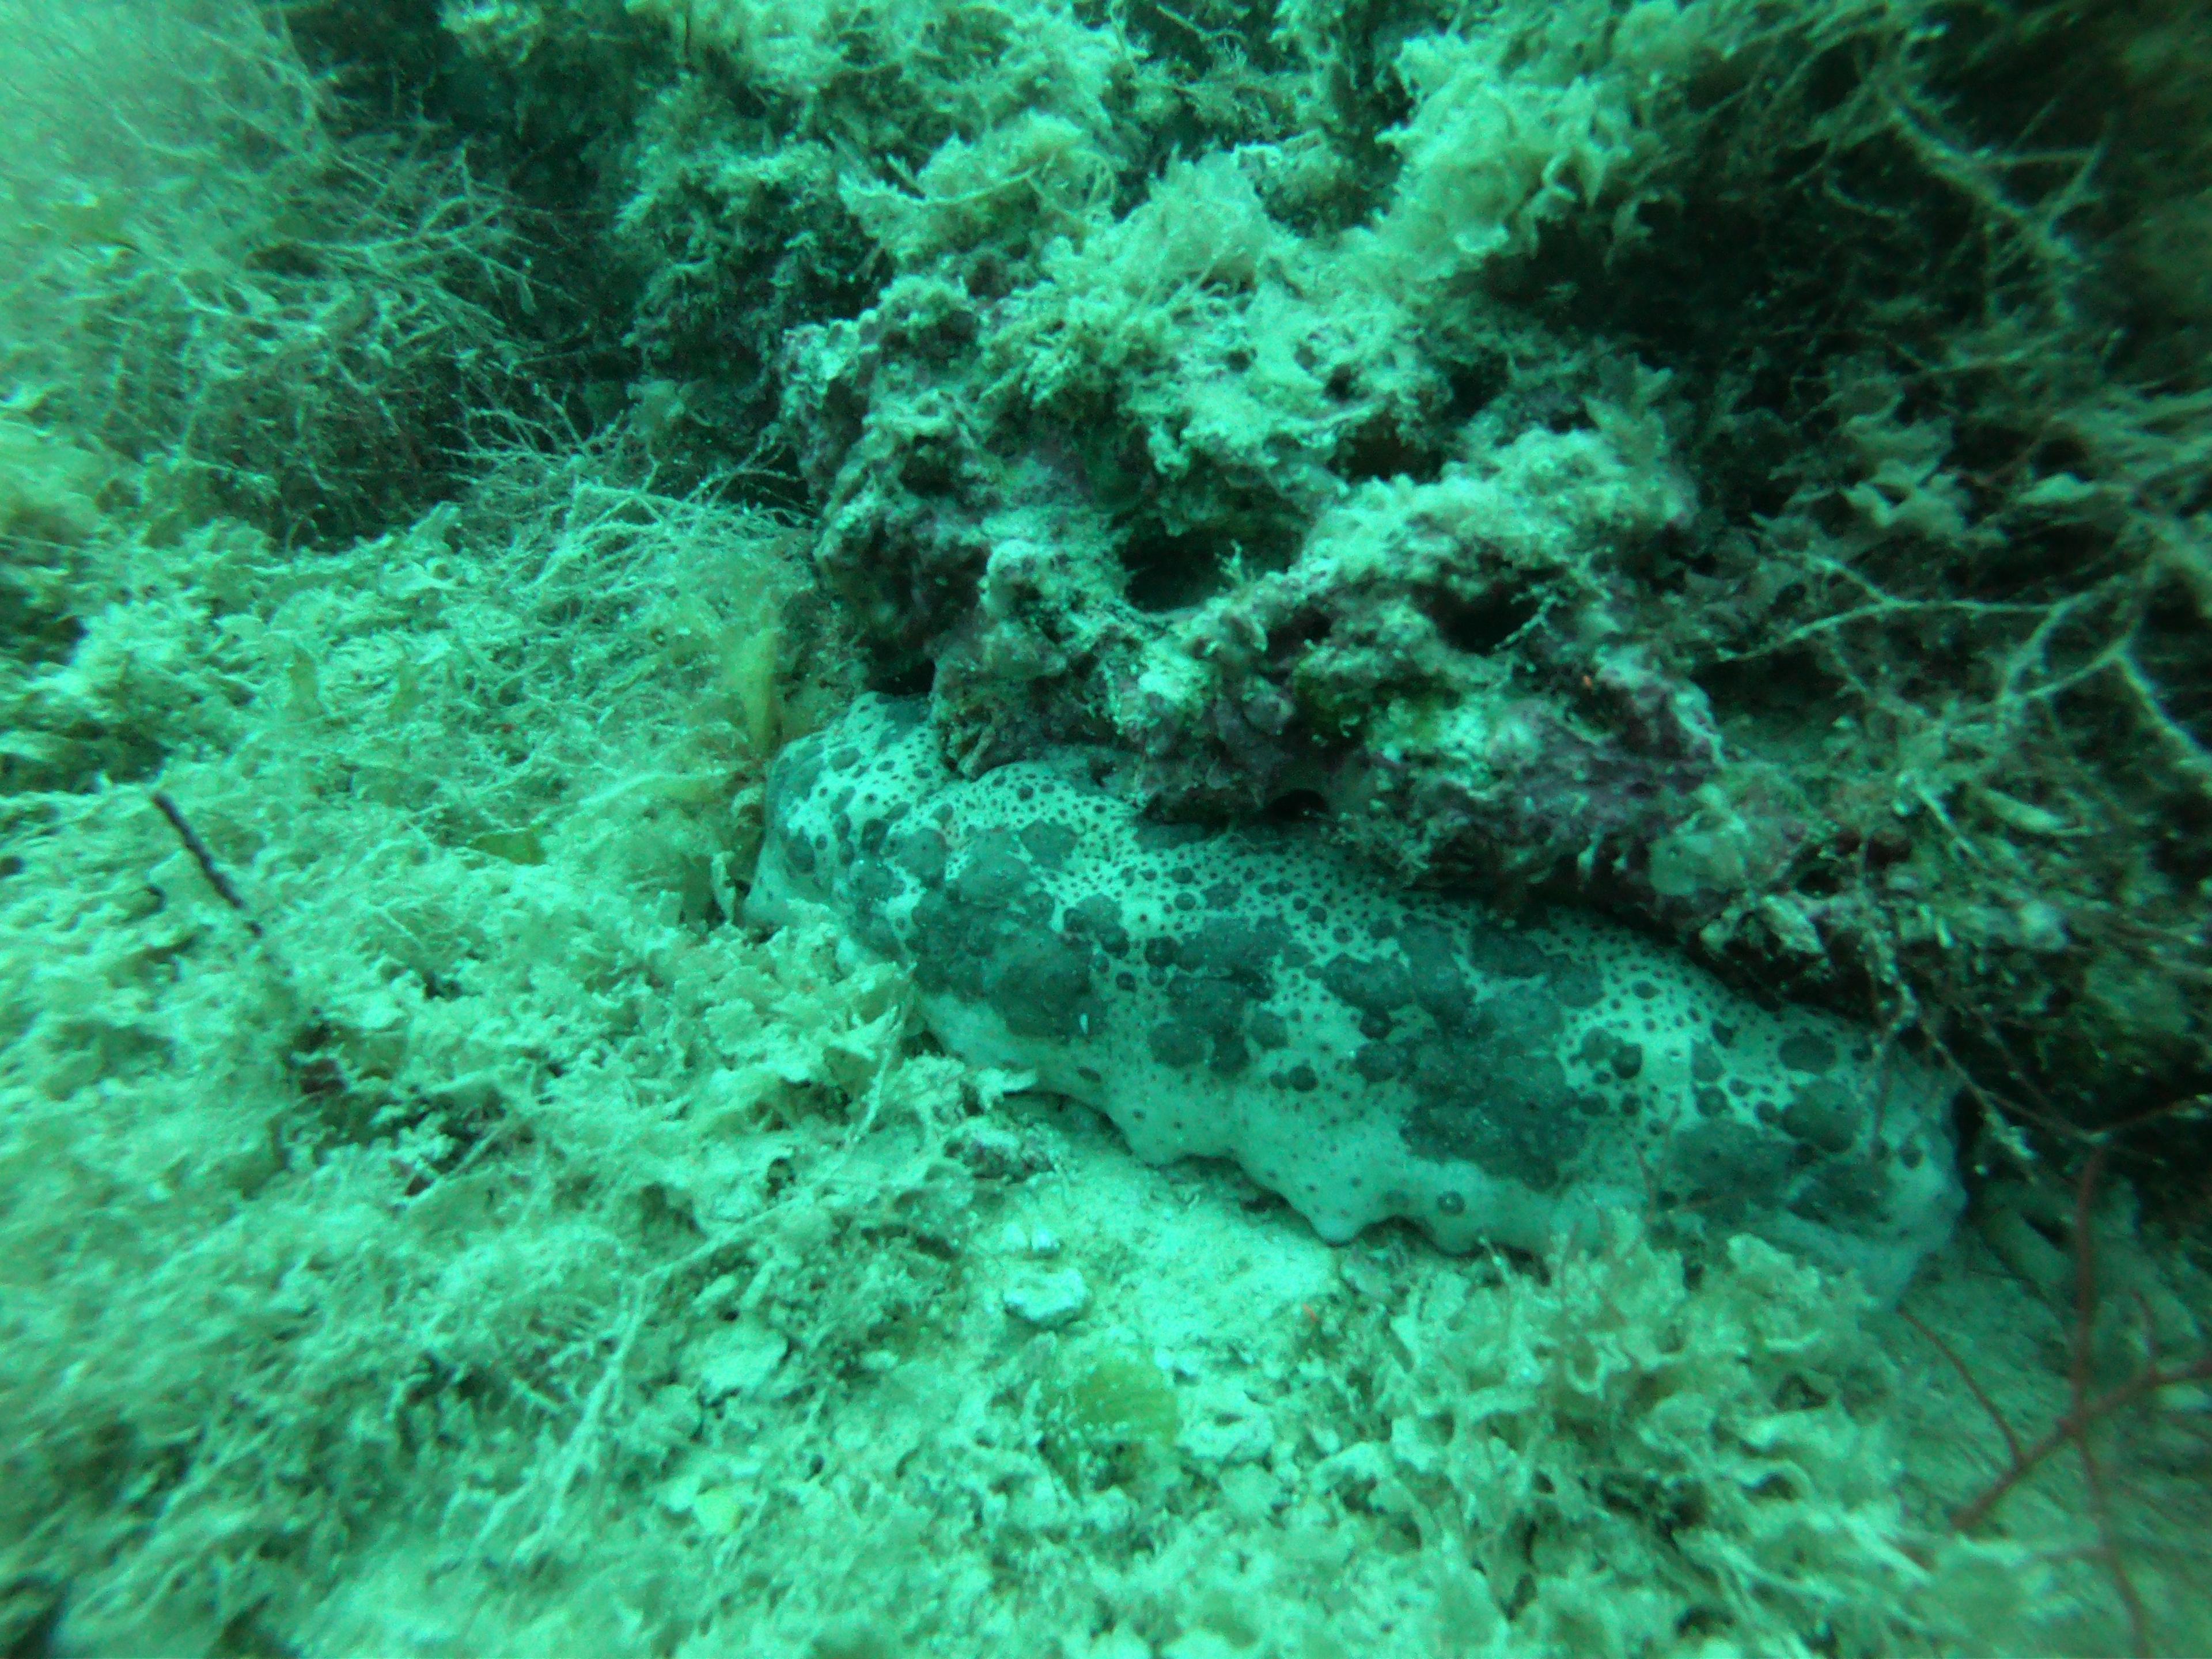 Sea cucumber in the ocean